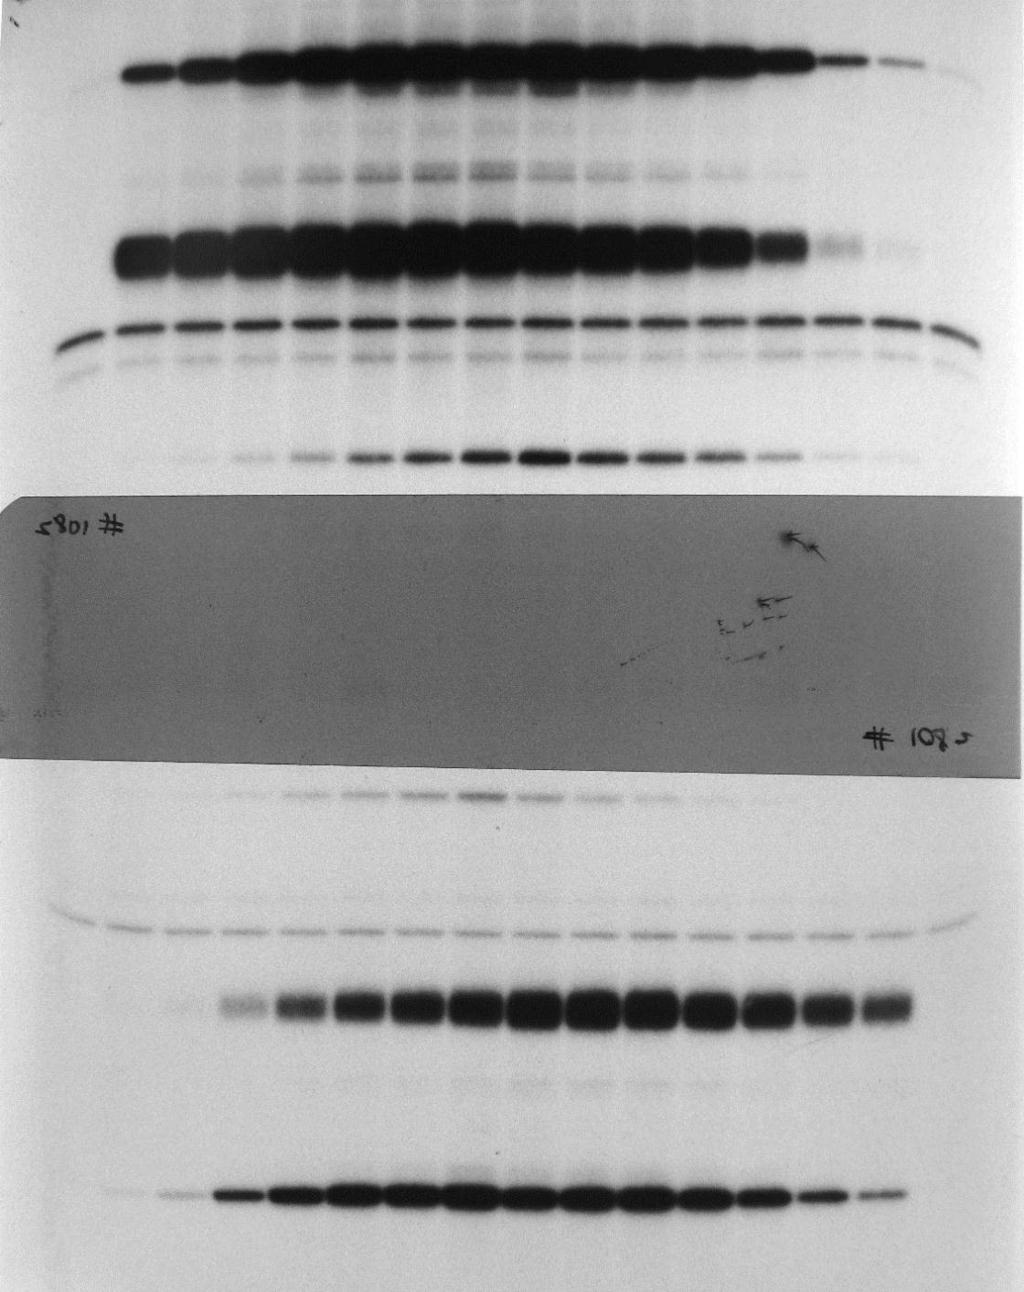 NP R416A pcdna-np 0.25.5 1 2 wt NP 3 4 5 0.25.5 1 2 3 4 5 vrna mrna 5S rrna pcdna-np mrna αnp 50 50 α β-actin Relative RNA level (cf. wt NP) 37 Supplementary Fig. S5.